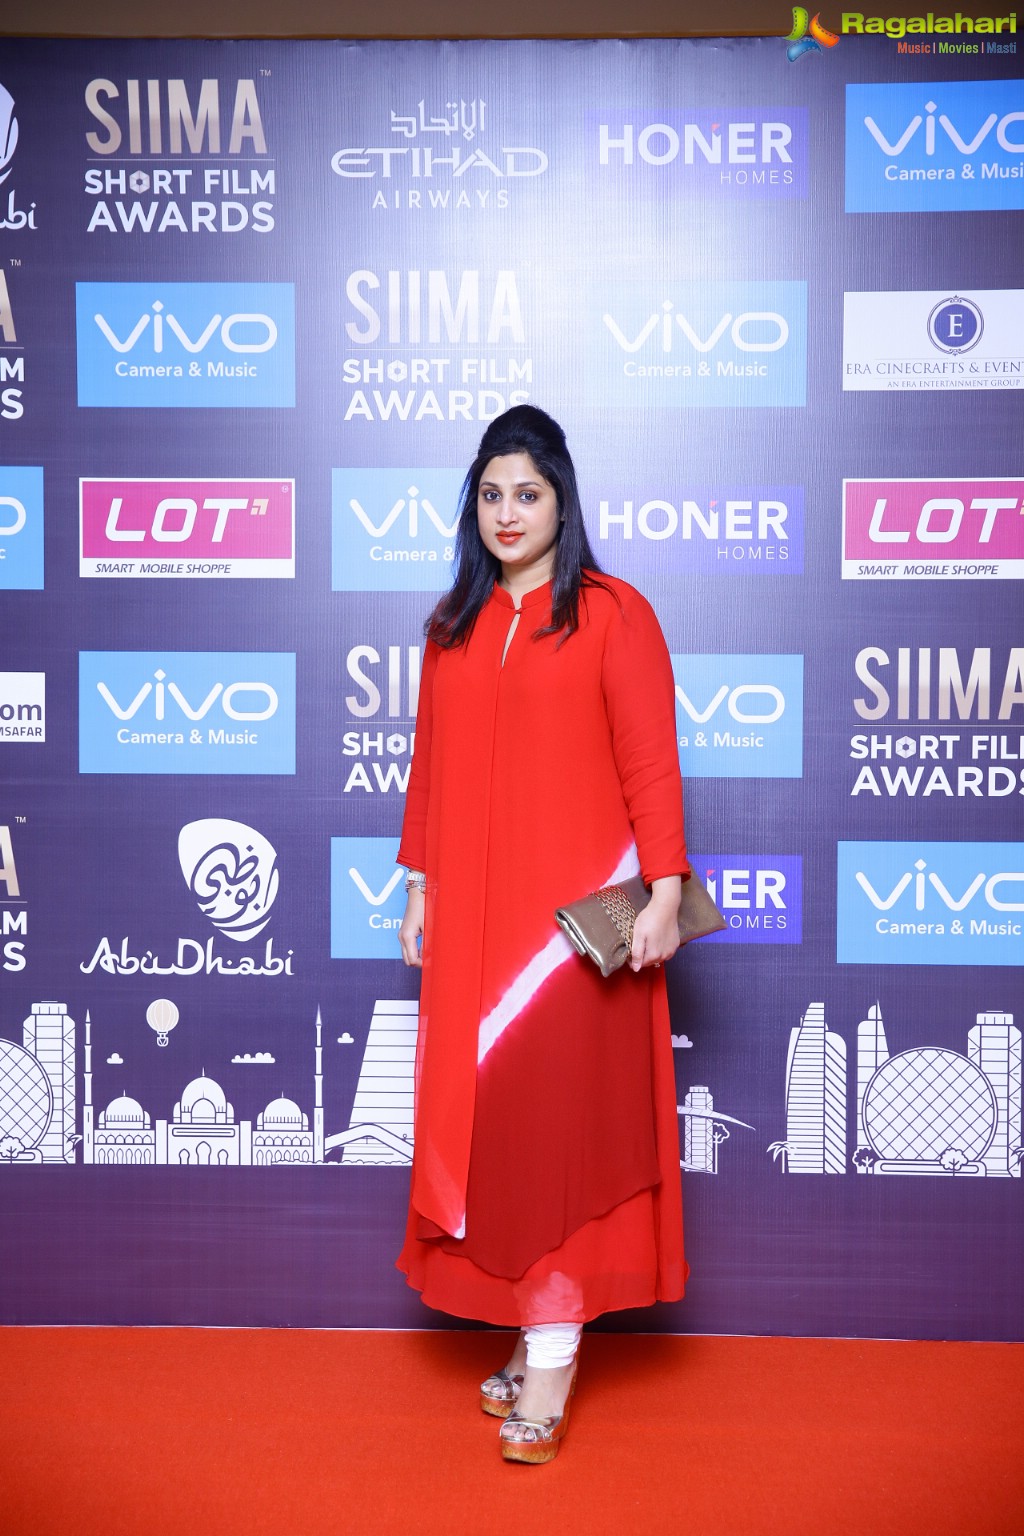 SIIMA 2017 Short Film Awards, Chennai